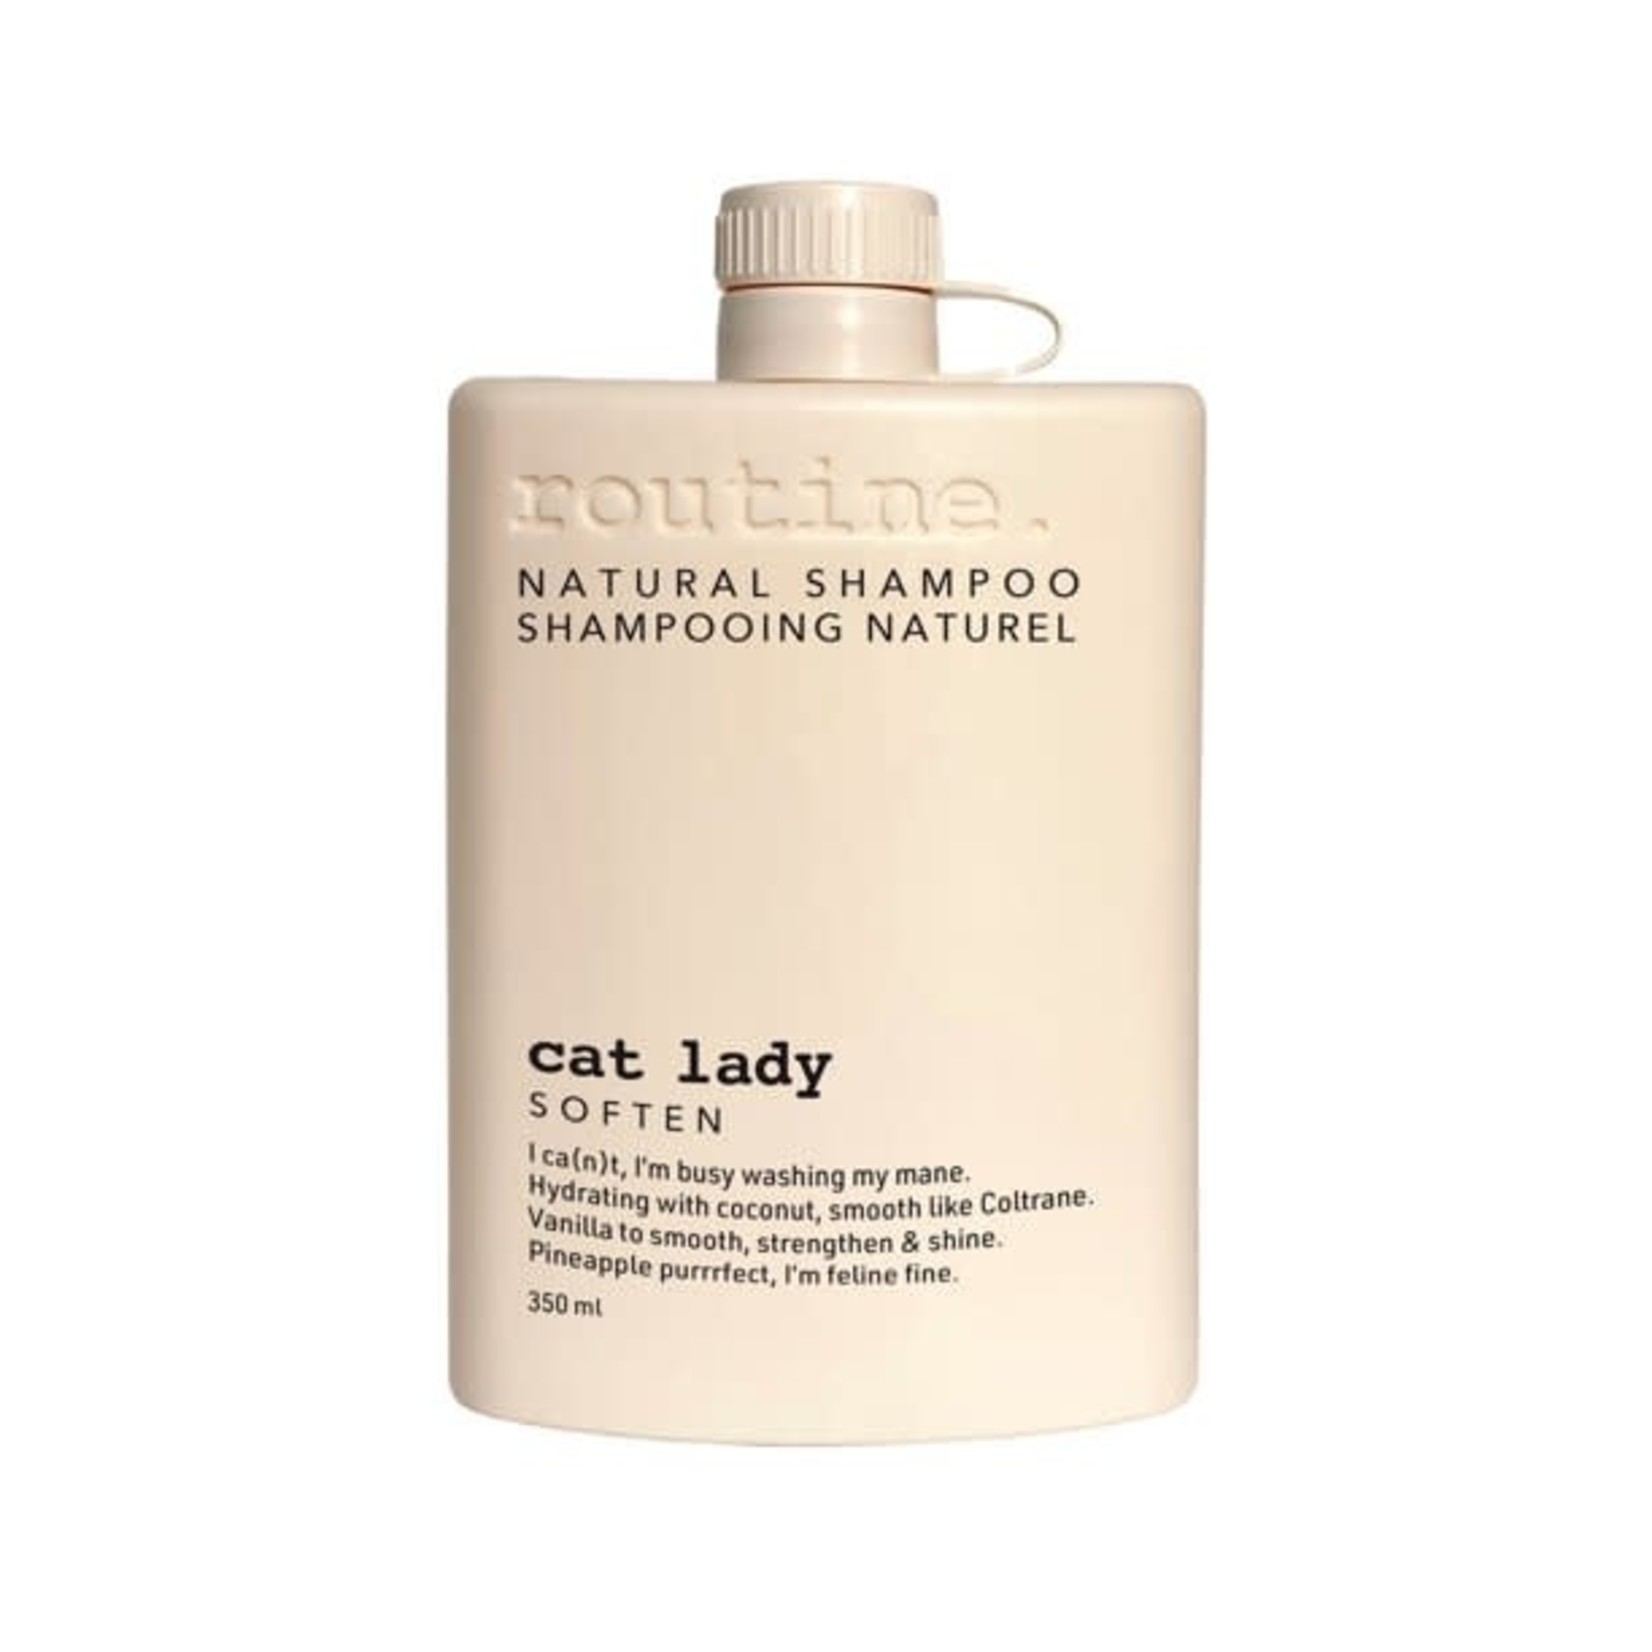 Routine Routine Shampoo Cat Lady 350ml